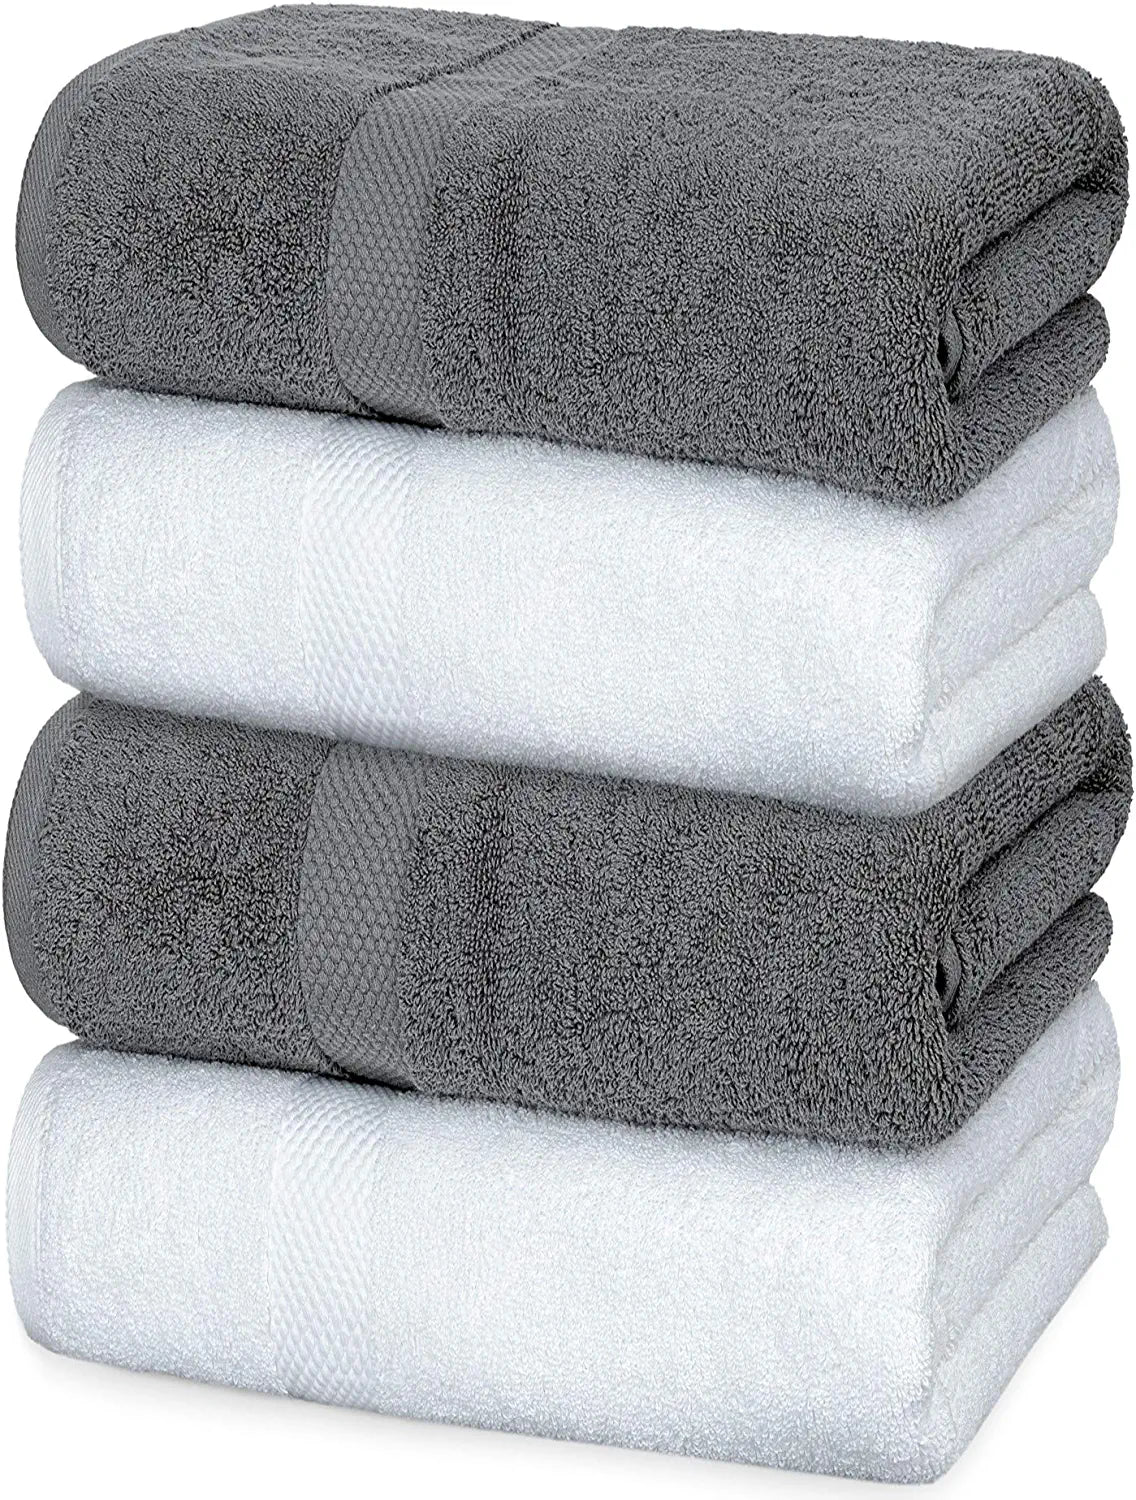 White Classic Luxury Cotton Bath Towels Large